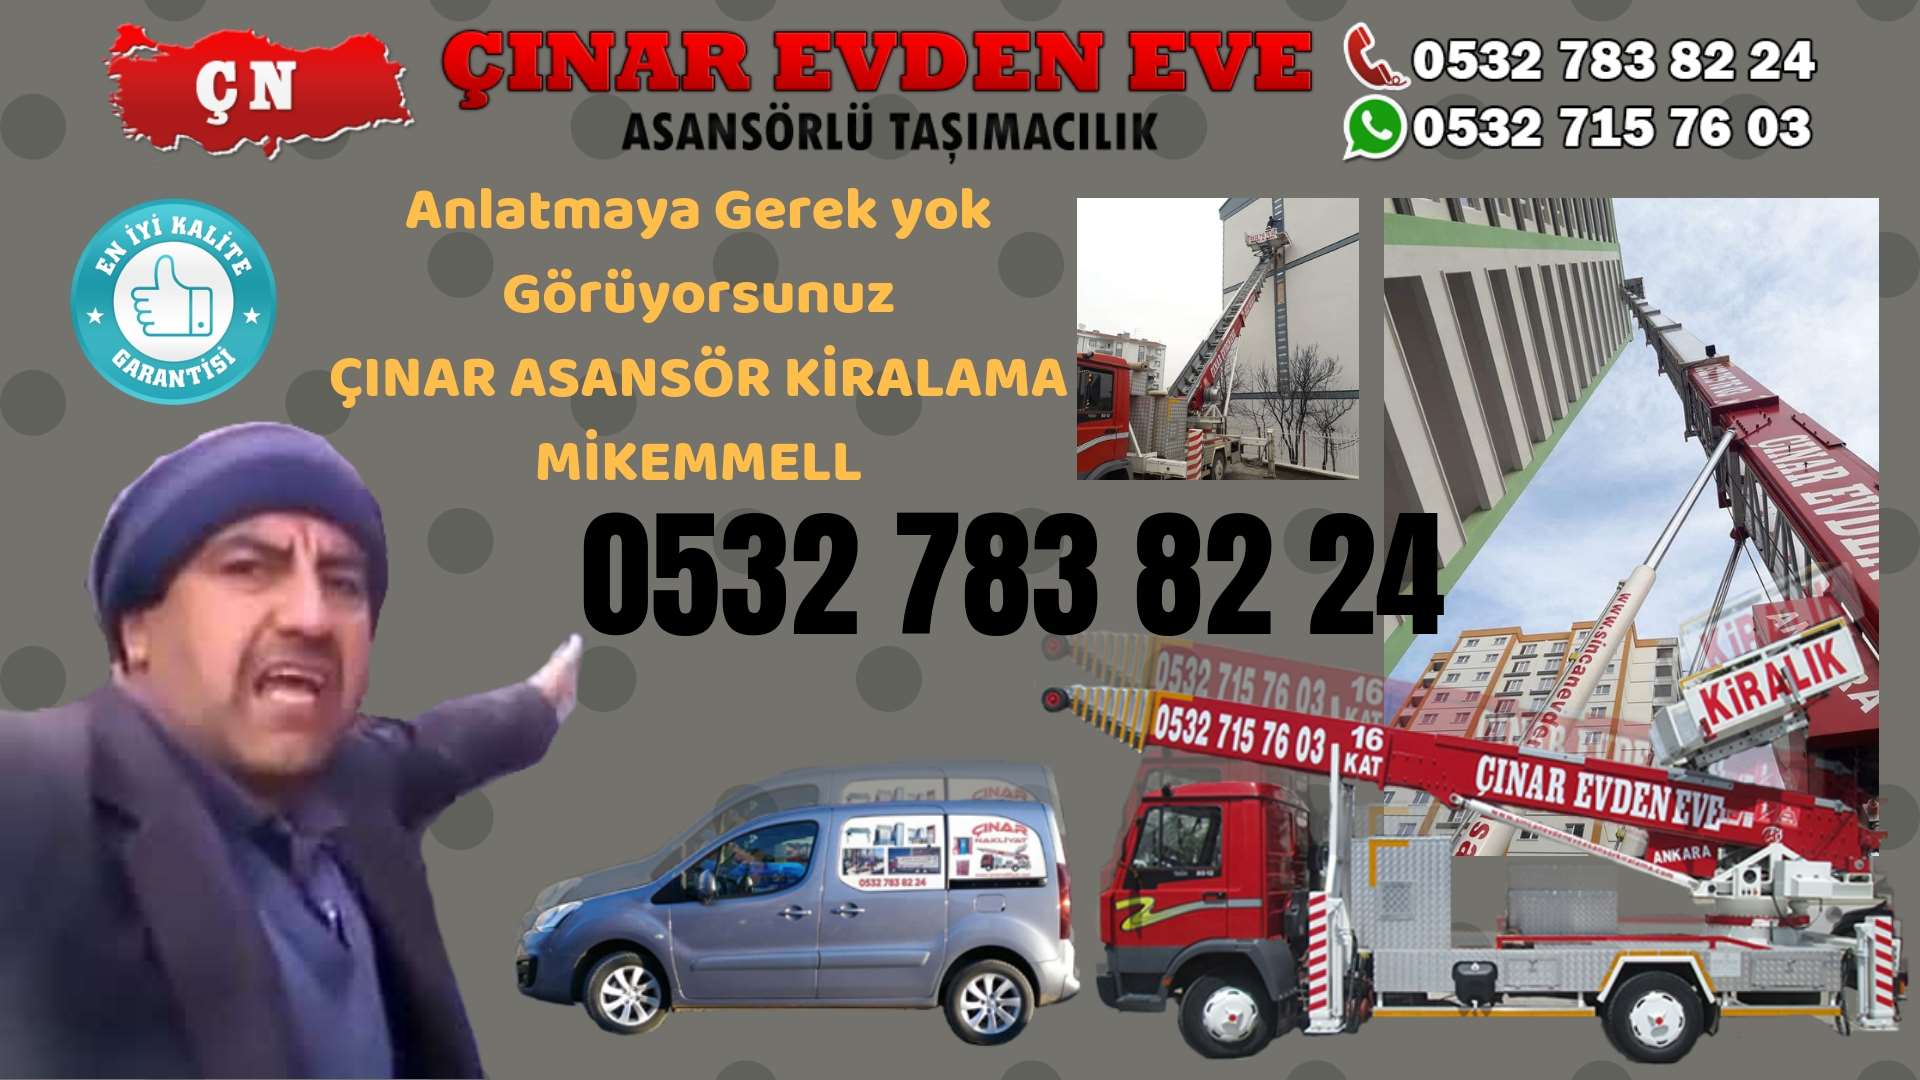 Ankara Batıkent Ankara asansör kiralama hizmeti sizlere başta kalite ve maddi acıdan tasarruf 0532 715 76 03